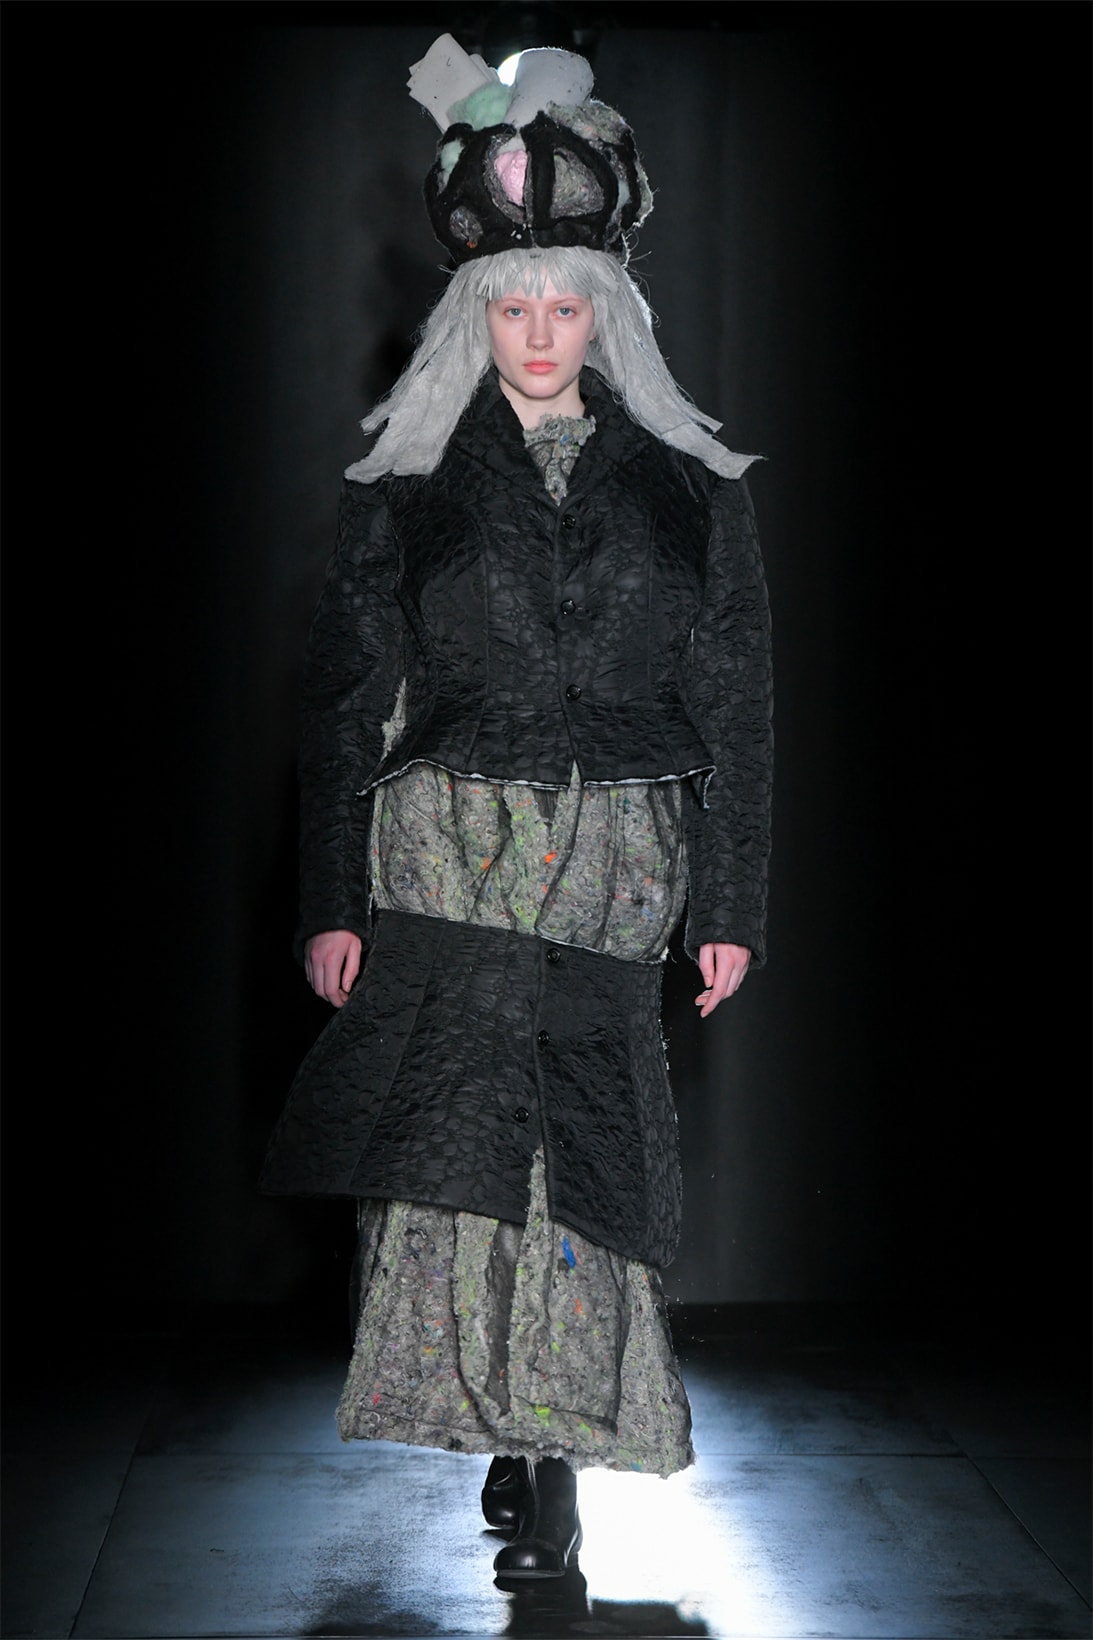 comme des garcons fall winter collection salomon pulsar platform tokyo runway show cropped suit dress headpiece black gray